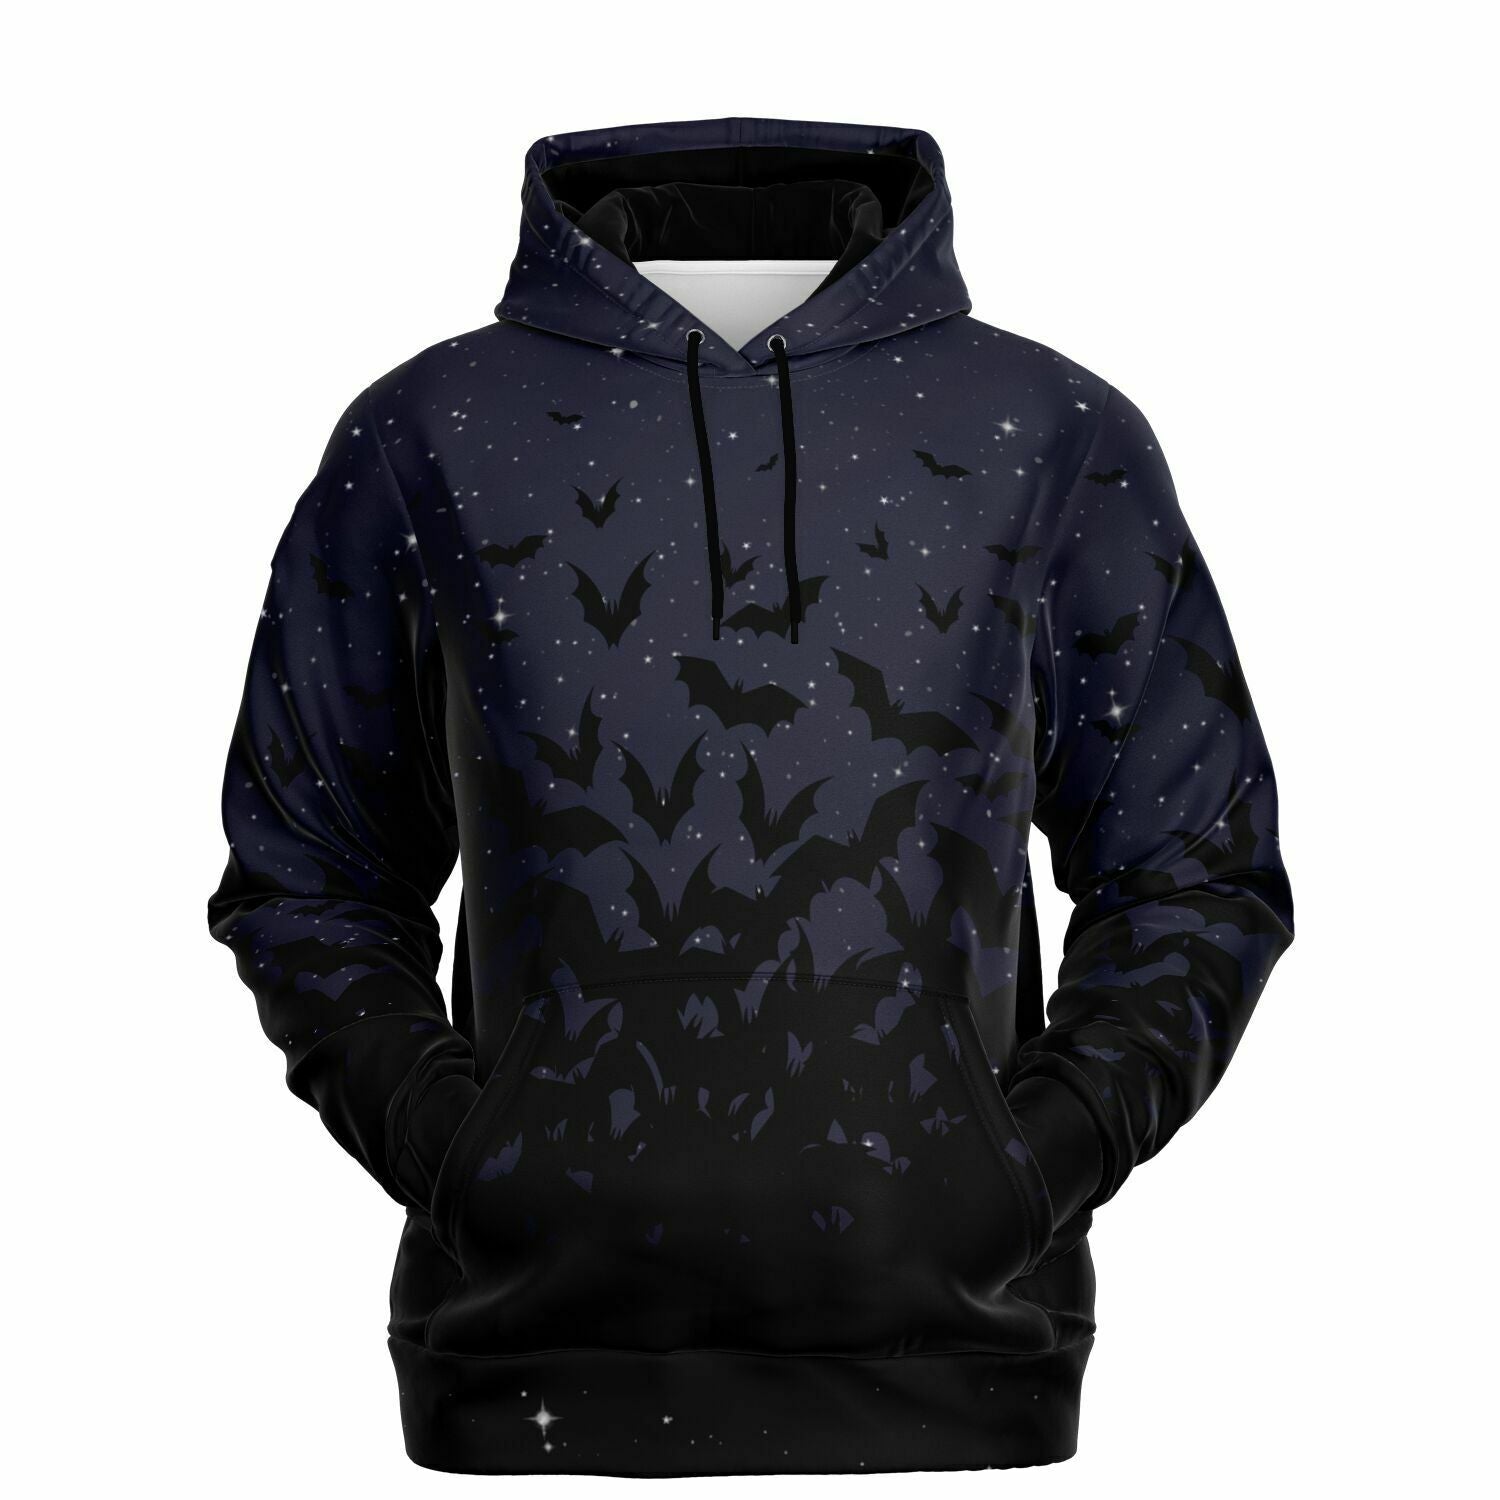 Bats in the Dark Night Fashion Hoodie